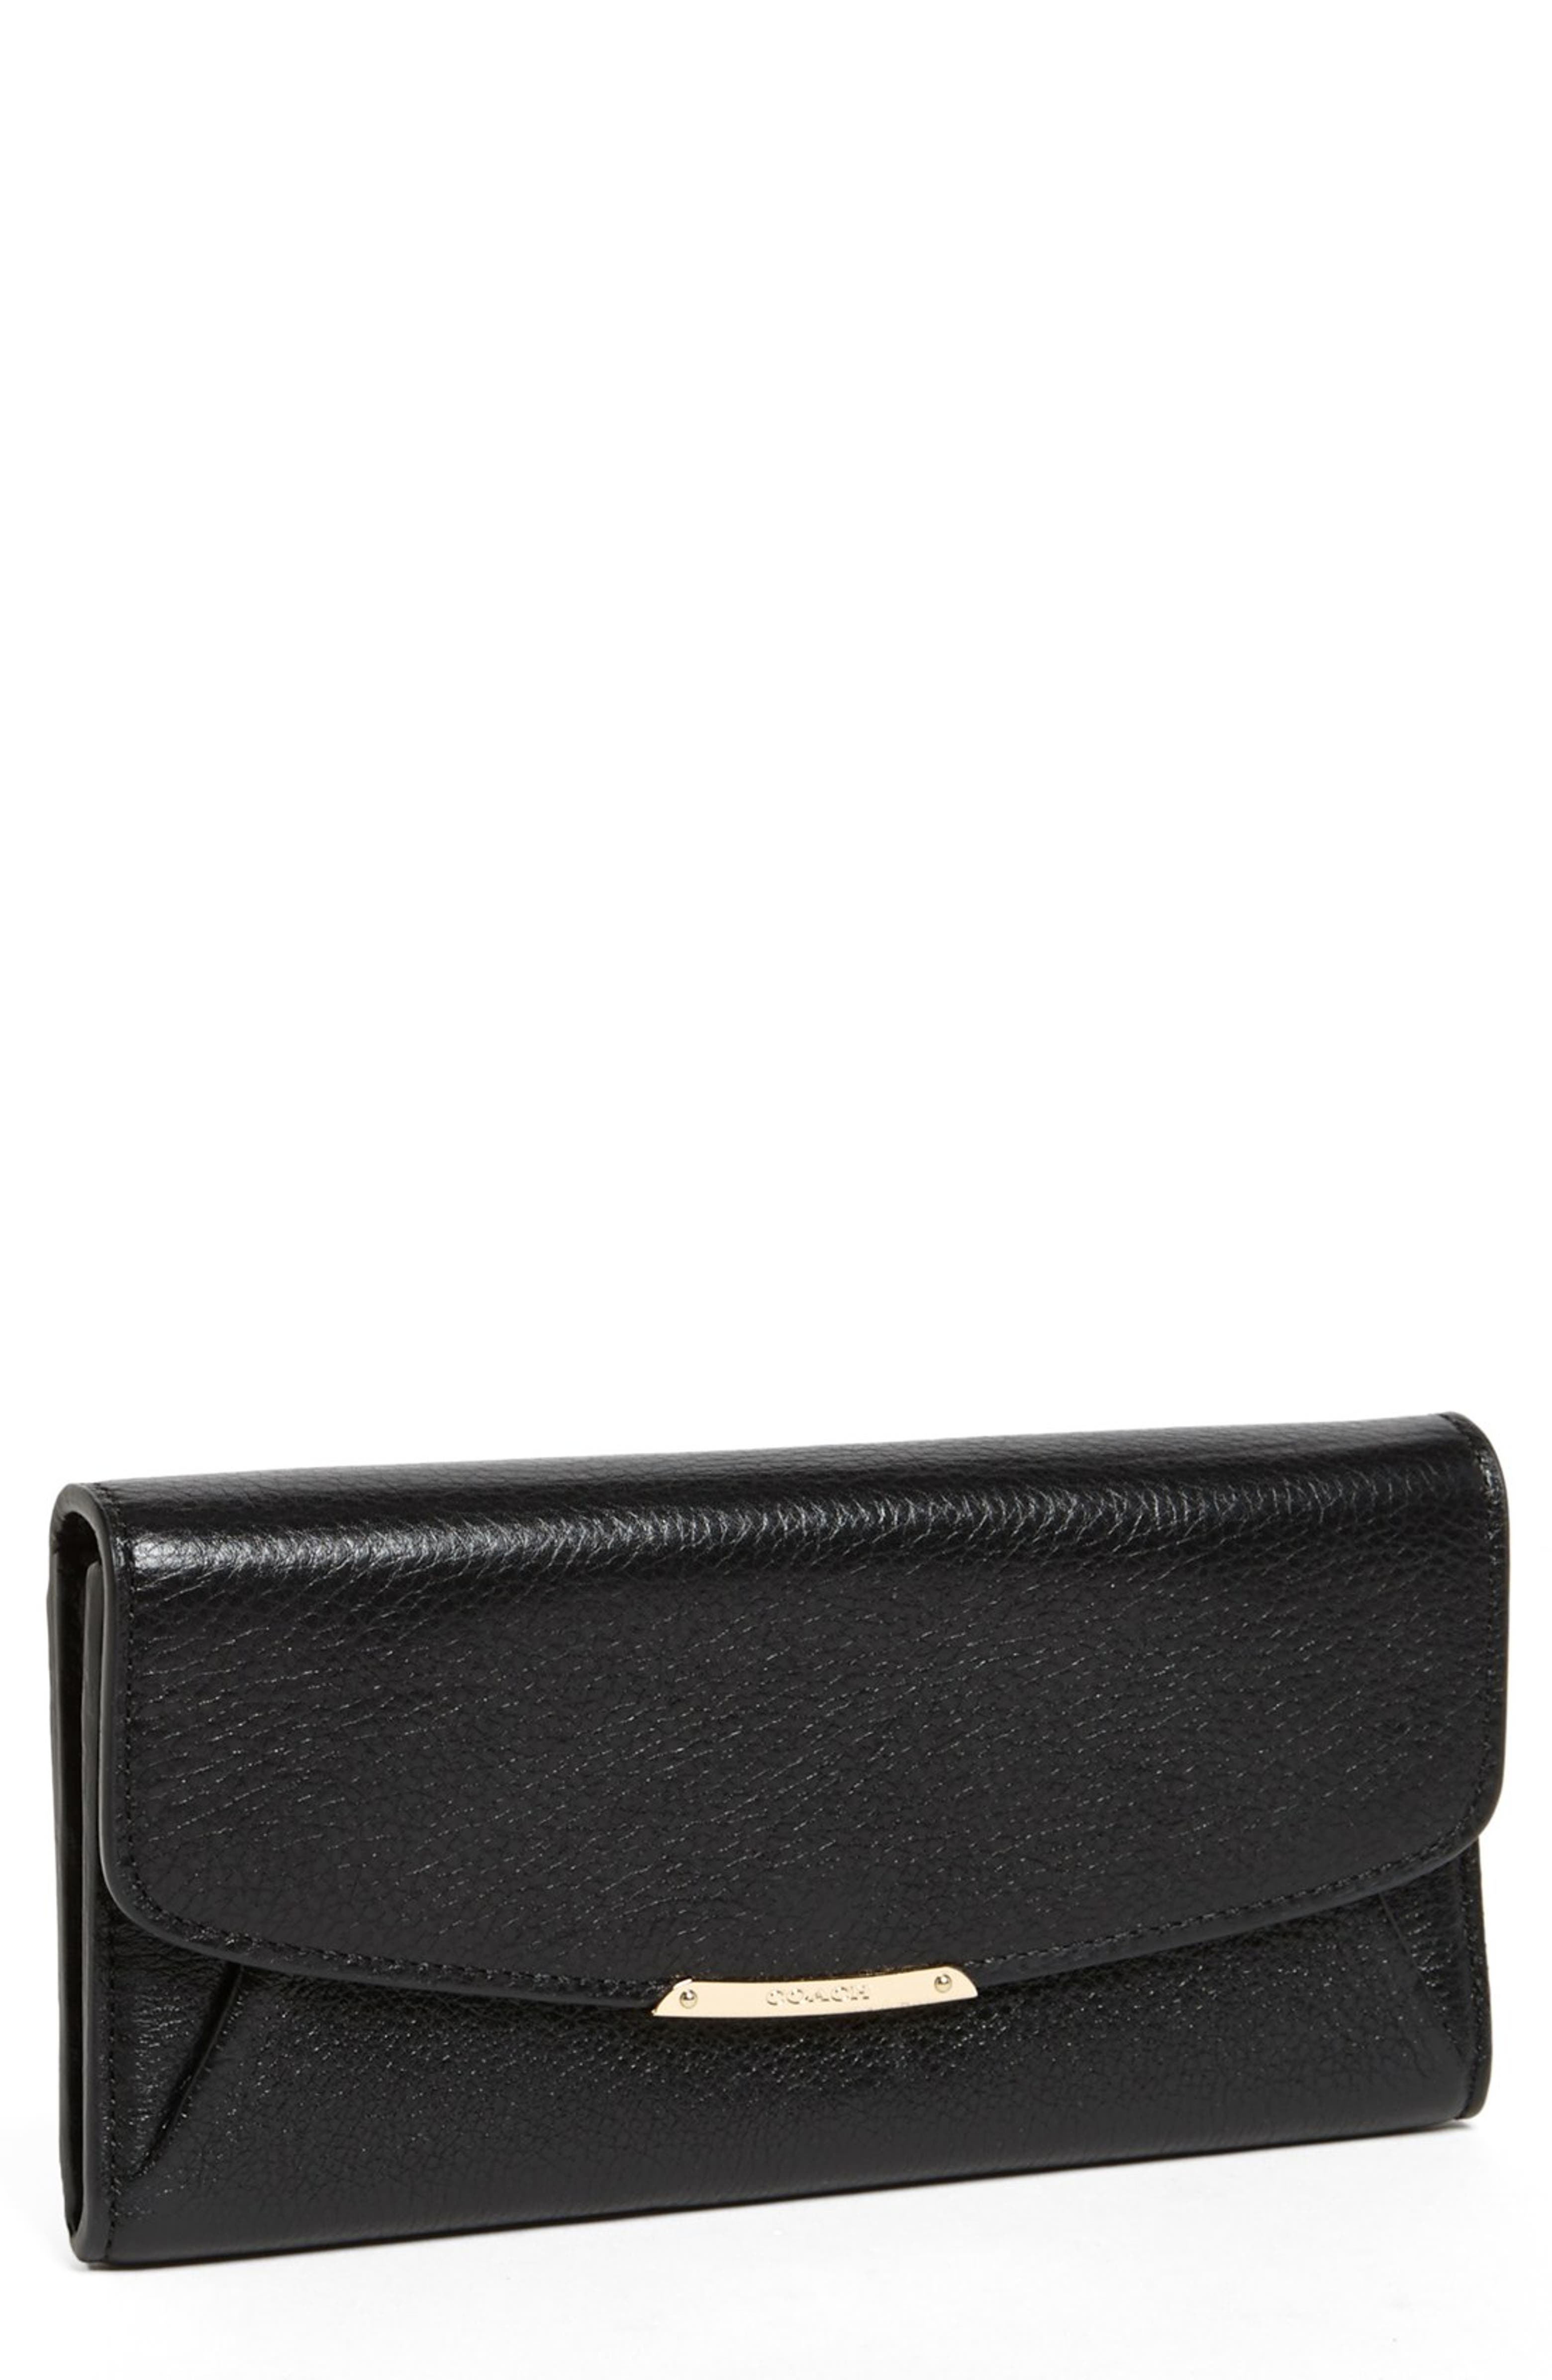 COACH 'Madison' Leather Envelope Wallet | Nordstrom